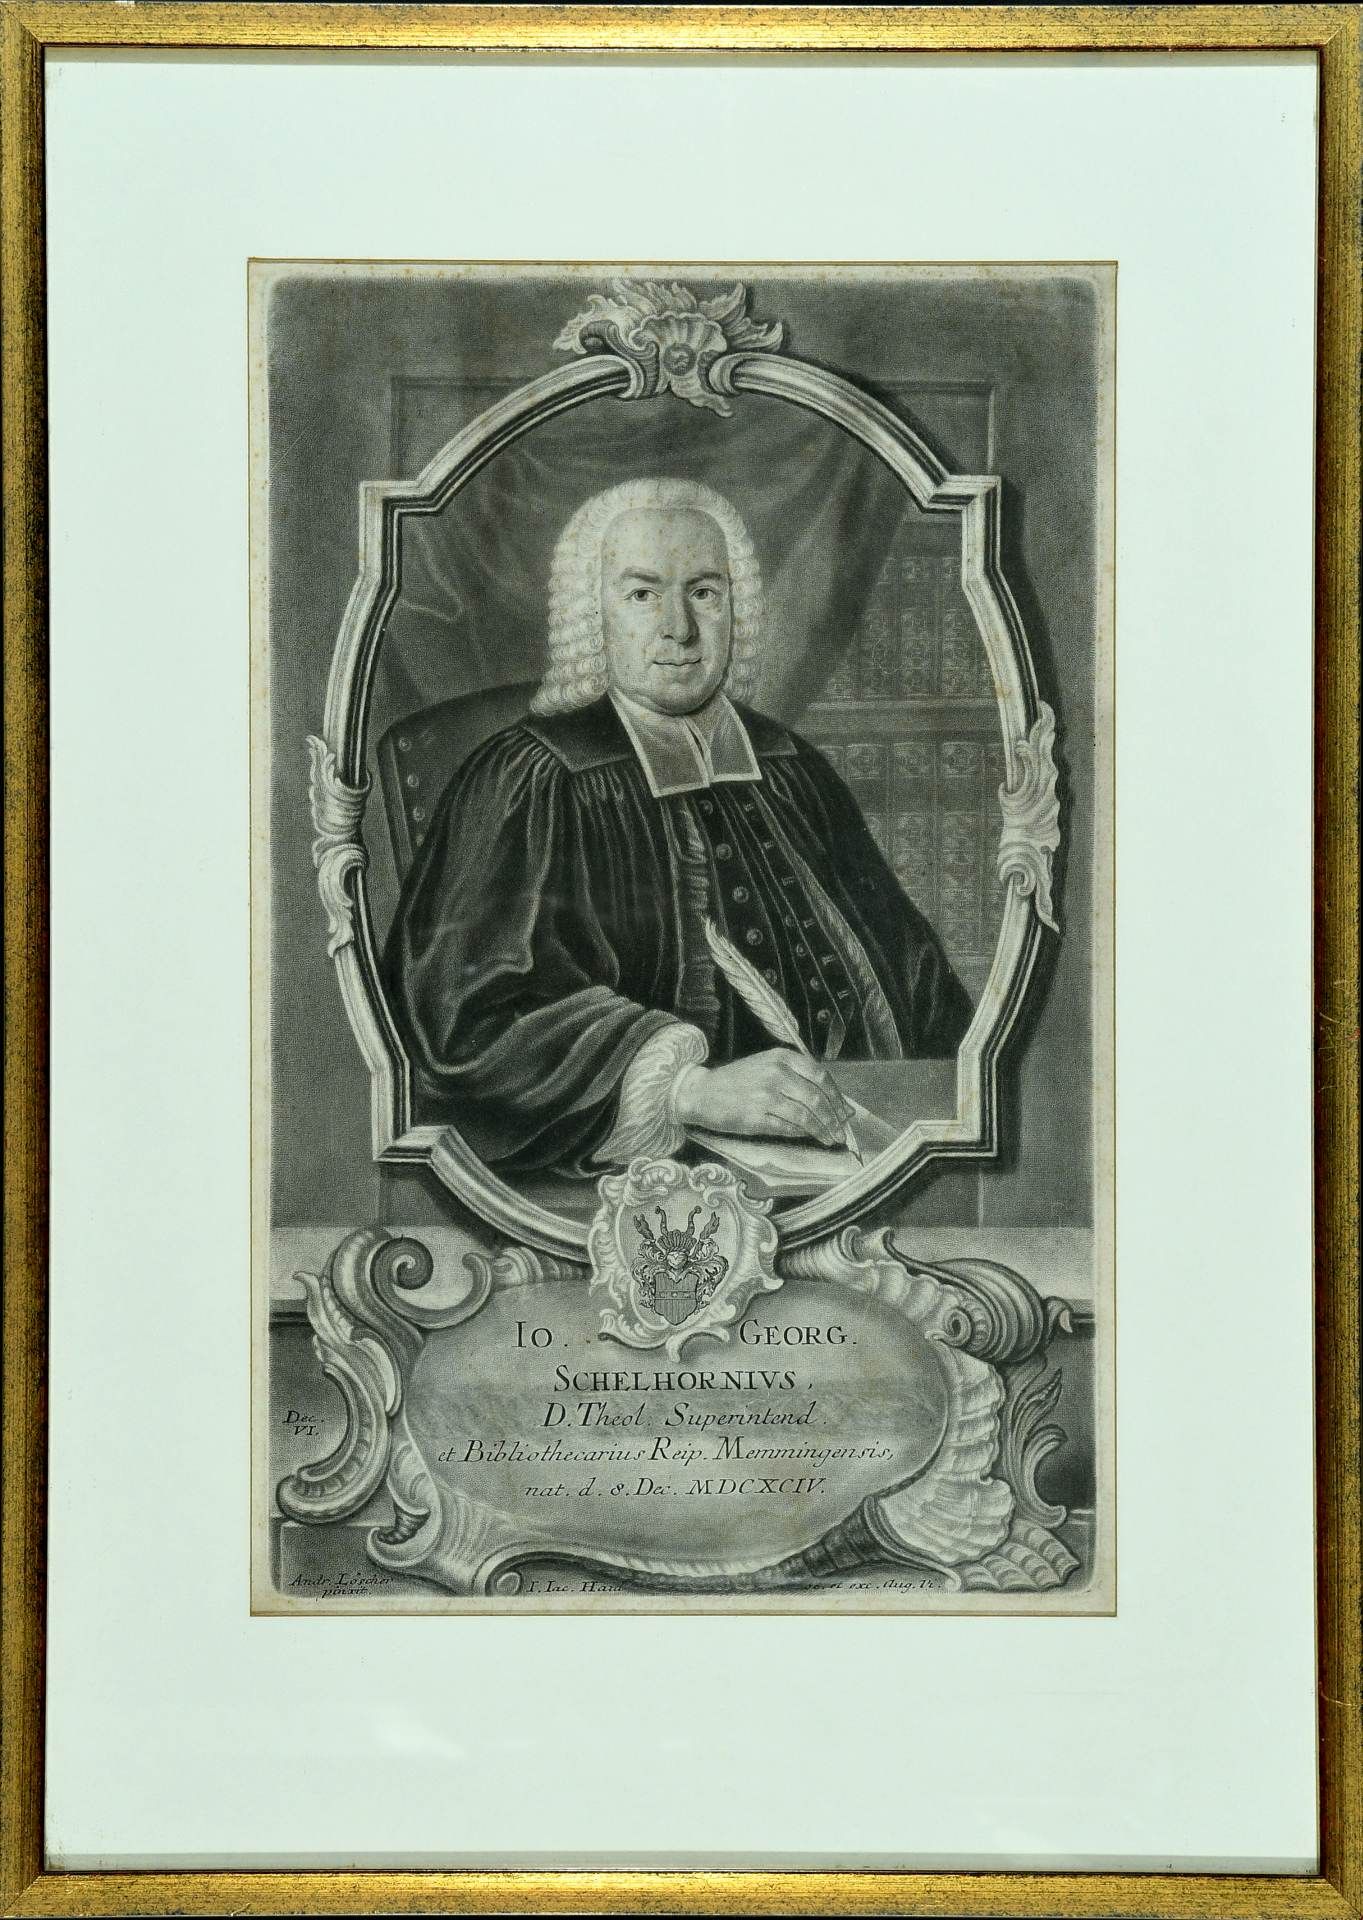 Haid, Johann Jakob, 1704 Kleineislingen - 1767 Augsburg